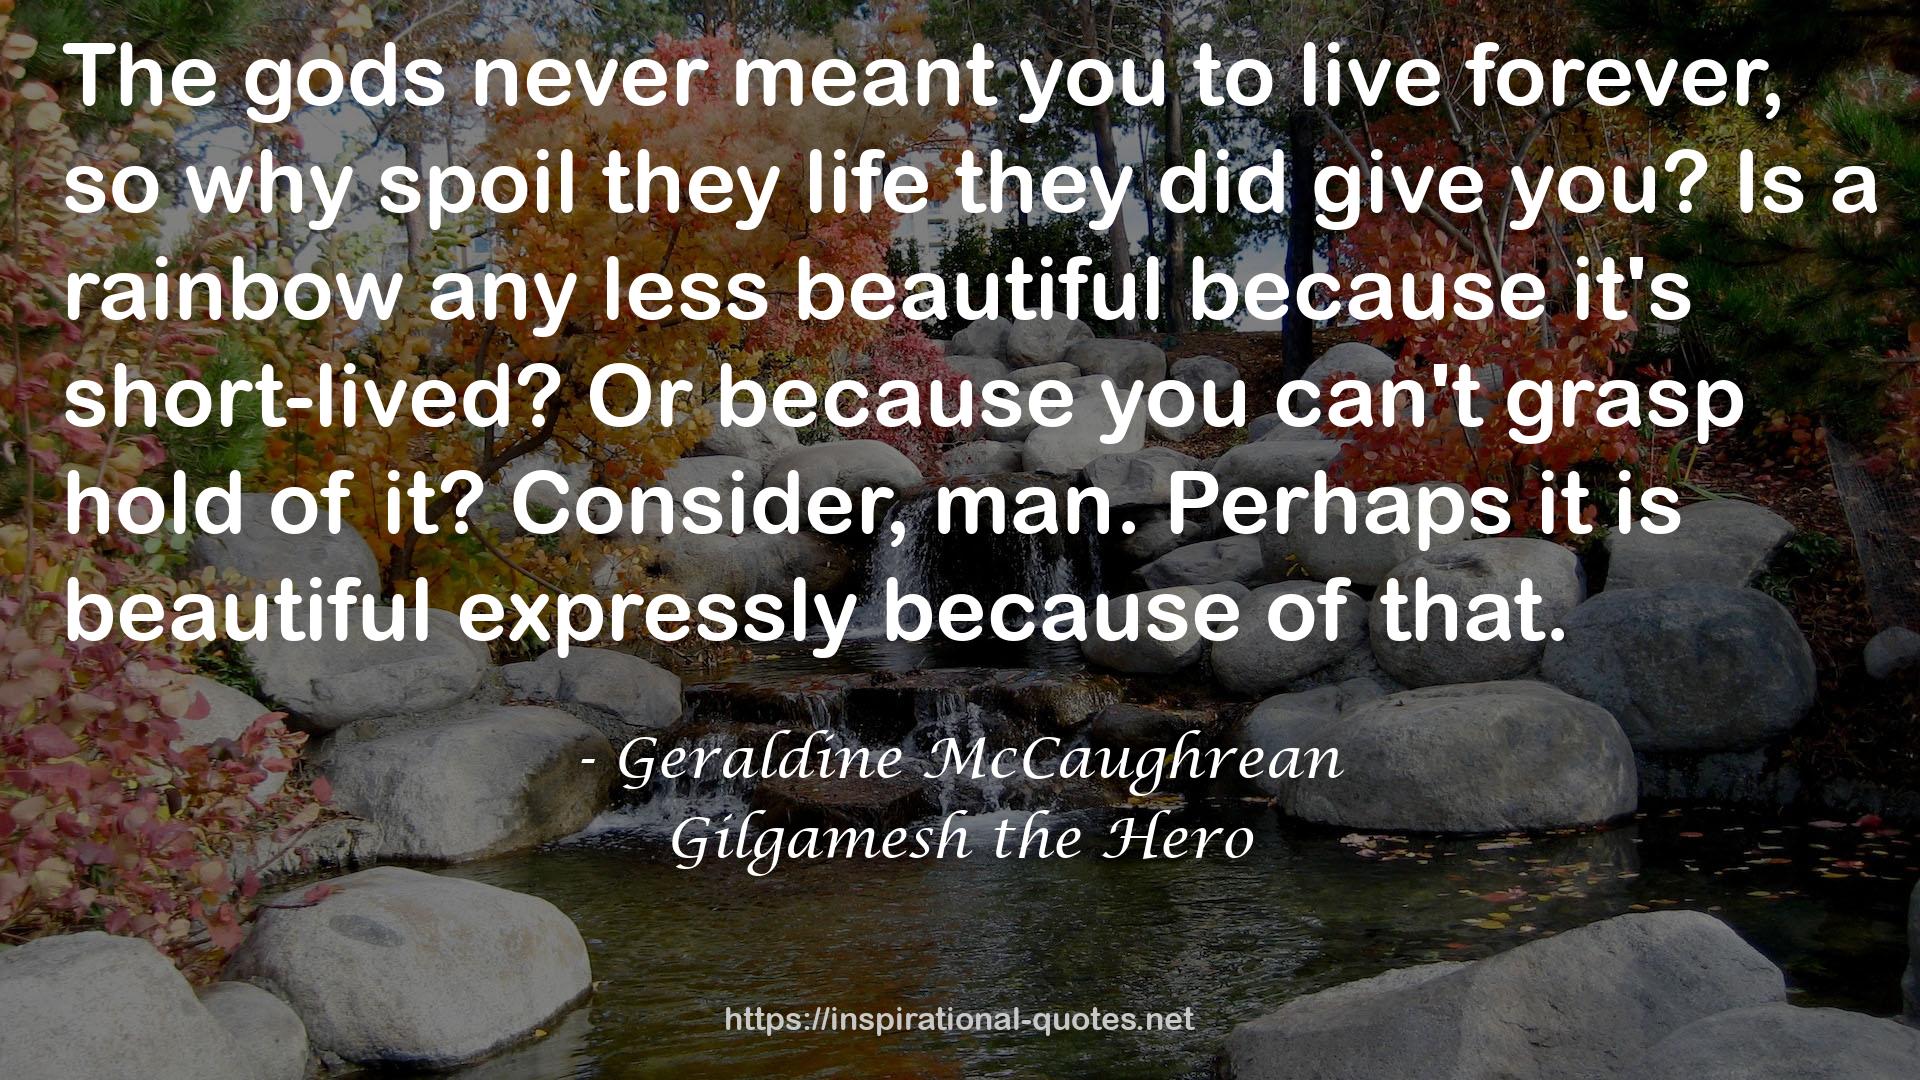 Gilgamesh the Hero QUOTES